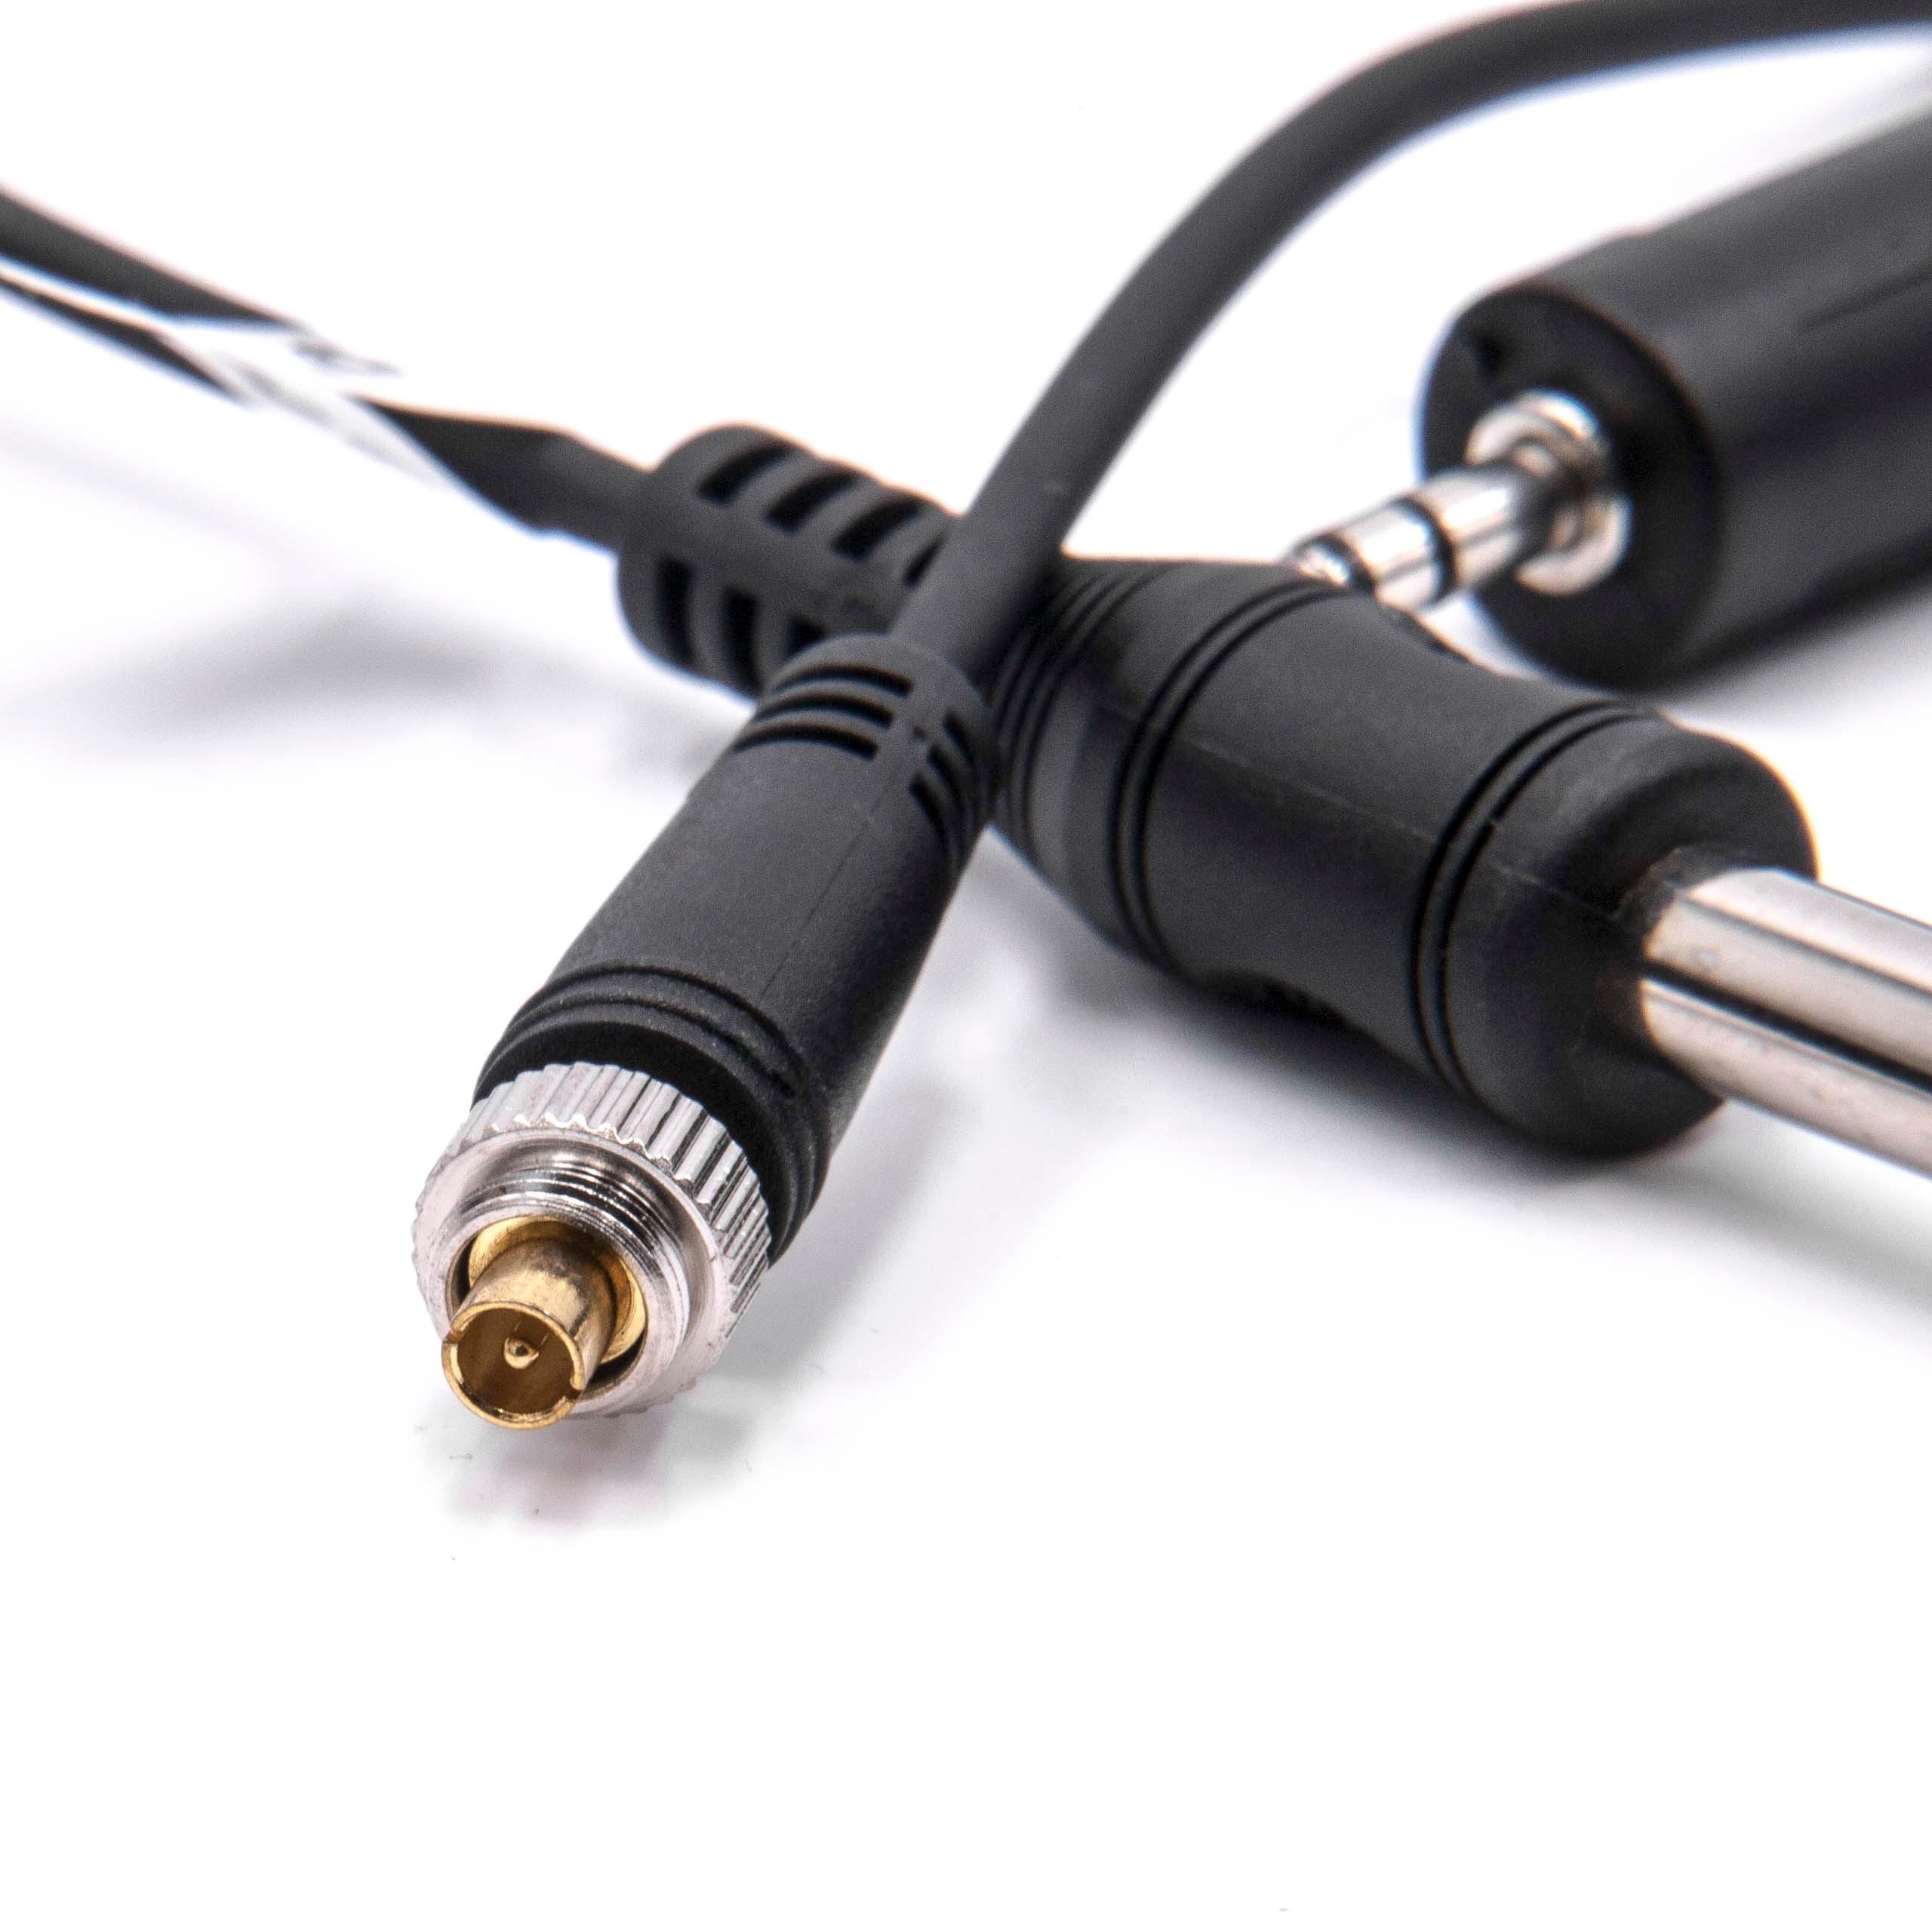 Flash PC sync cable, cord for 6.3mm, 3.5mm suitable for Yongnou RF-603 studio flash lighting, external flash u